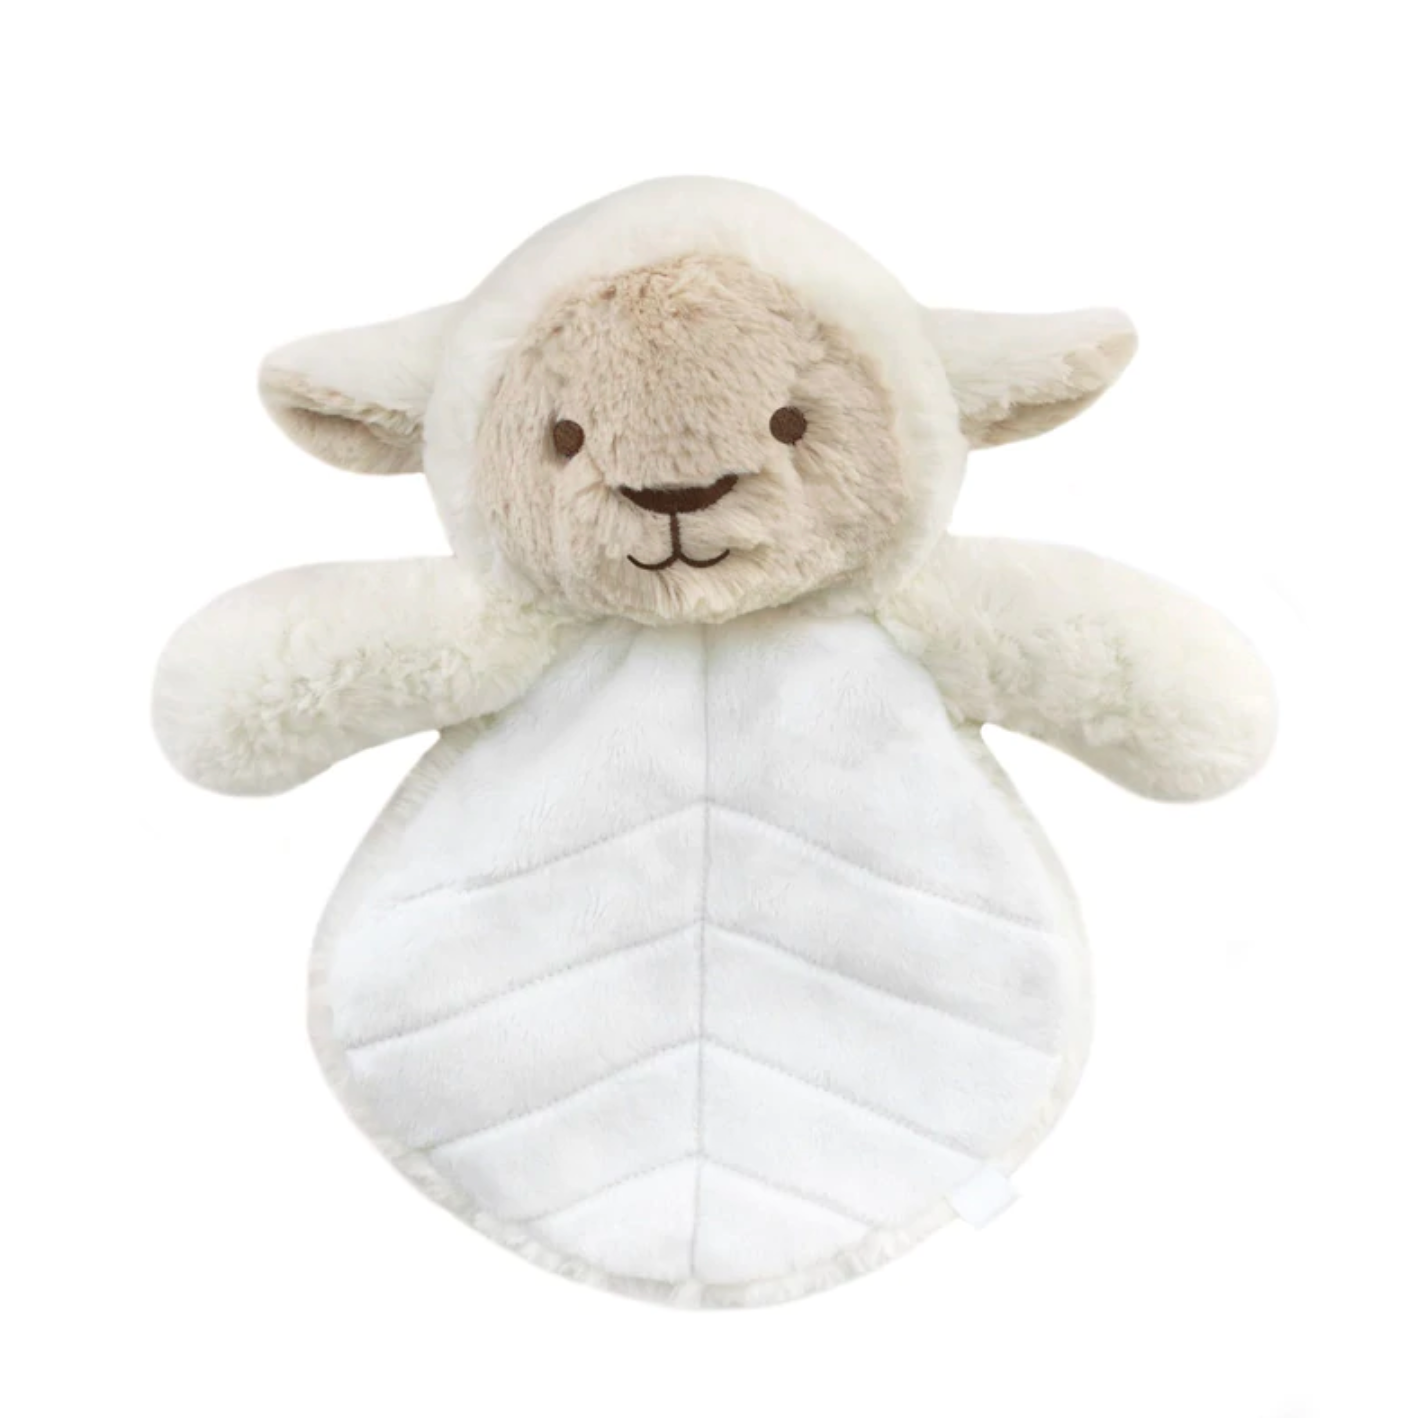 lee lamb lovey toy